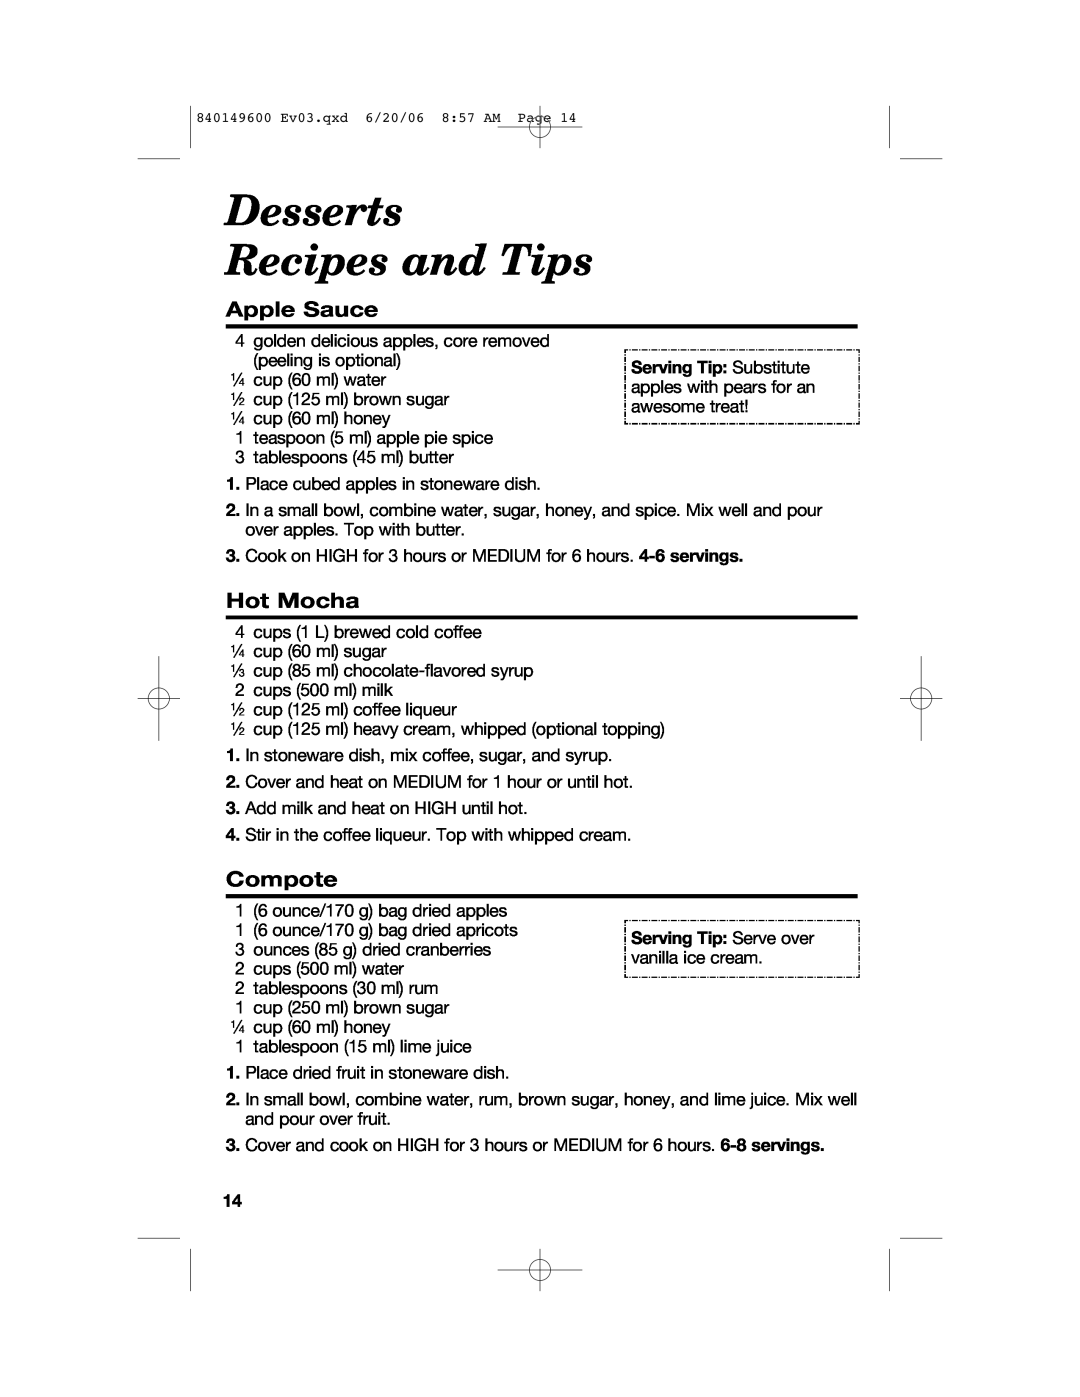 Hamilton Beach 840149600 manual Desserts Recipes and Tips, Apple Sauce, Hot Mocha, Compote 